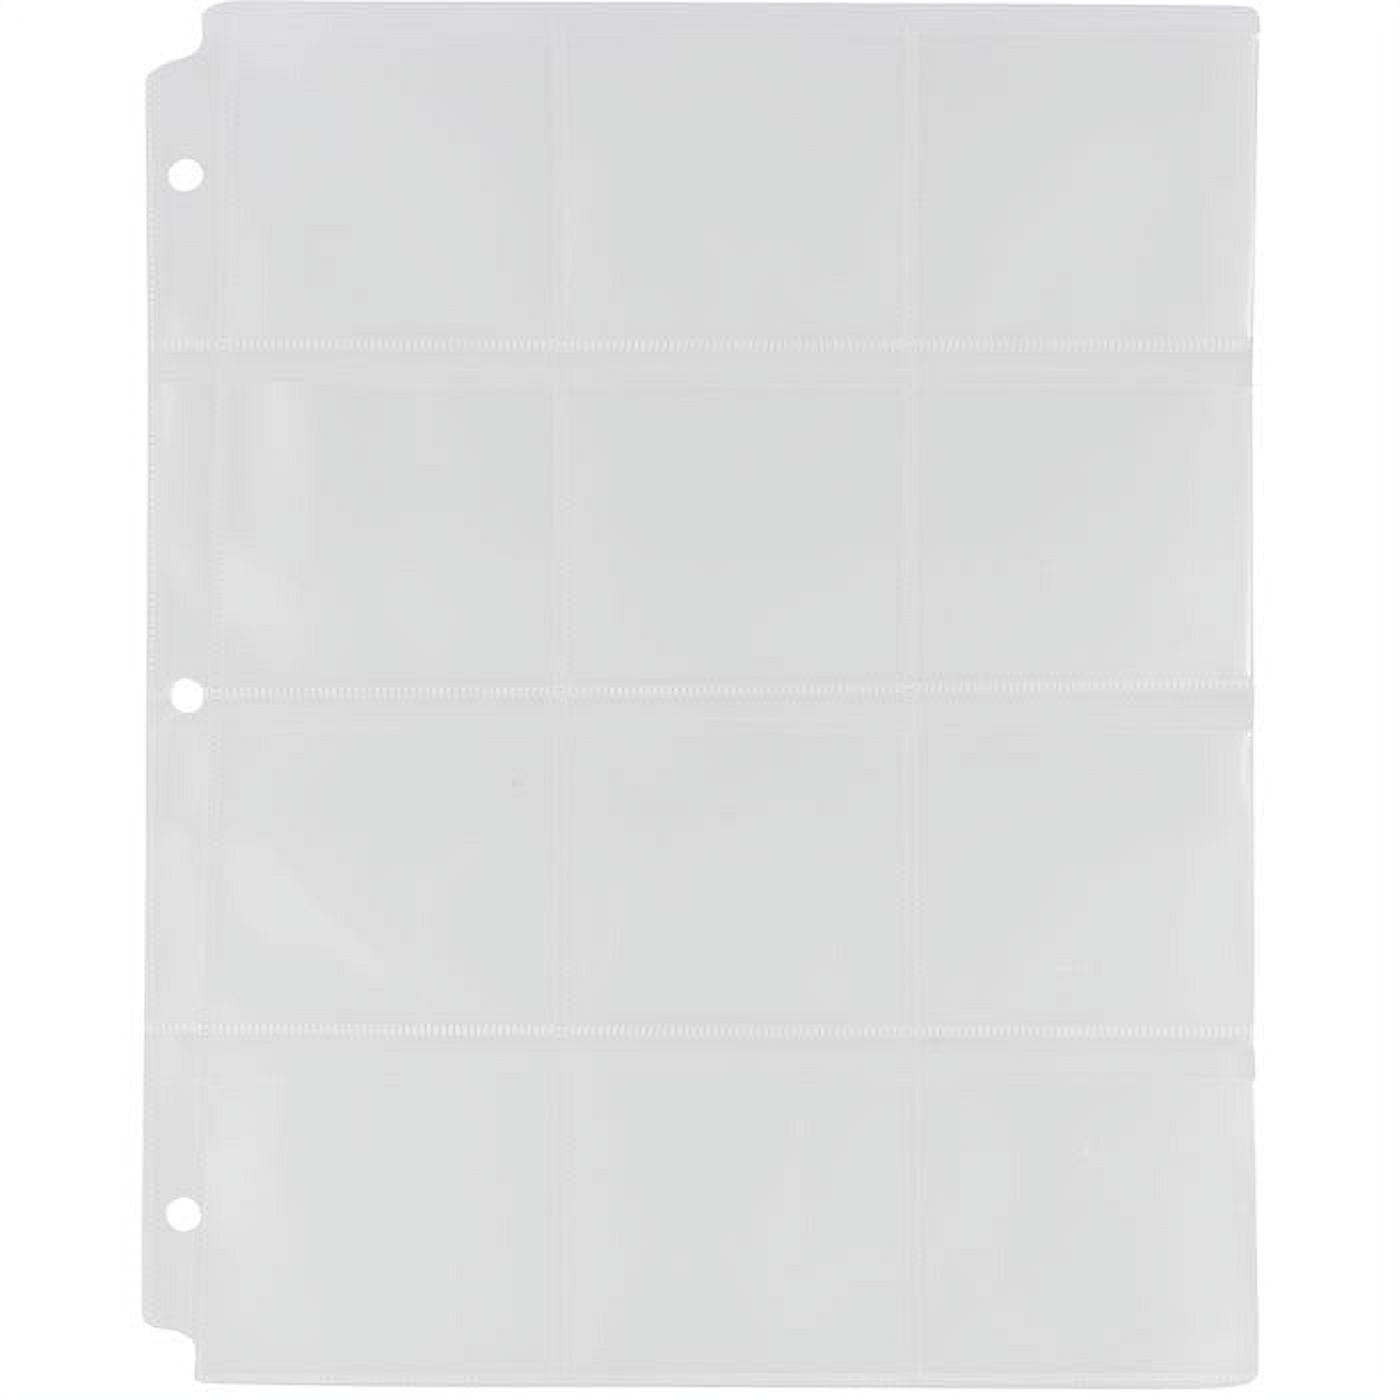  Dunwell Binder with Plastic Sleeves 12-Pocket (6 Pack